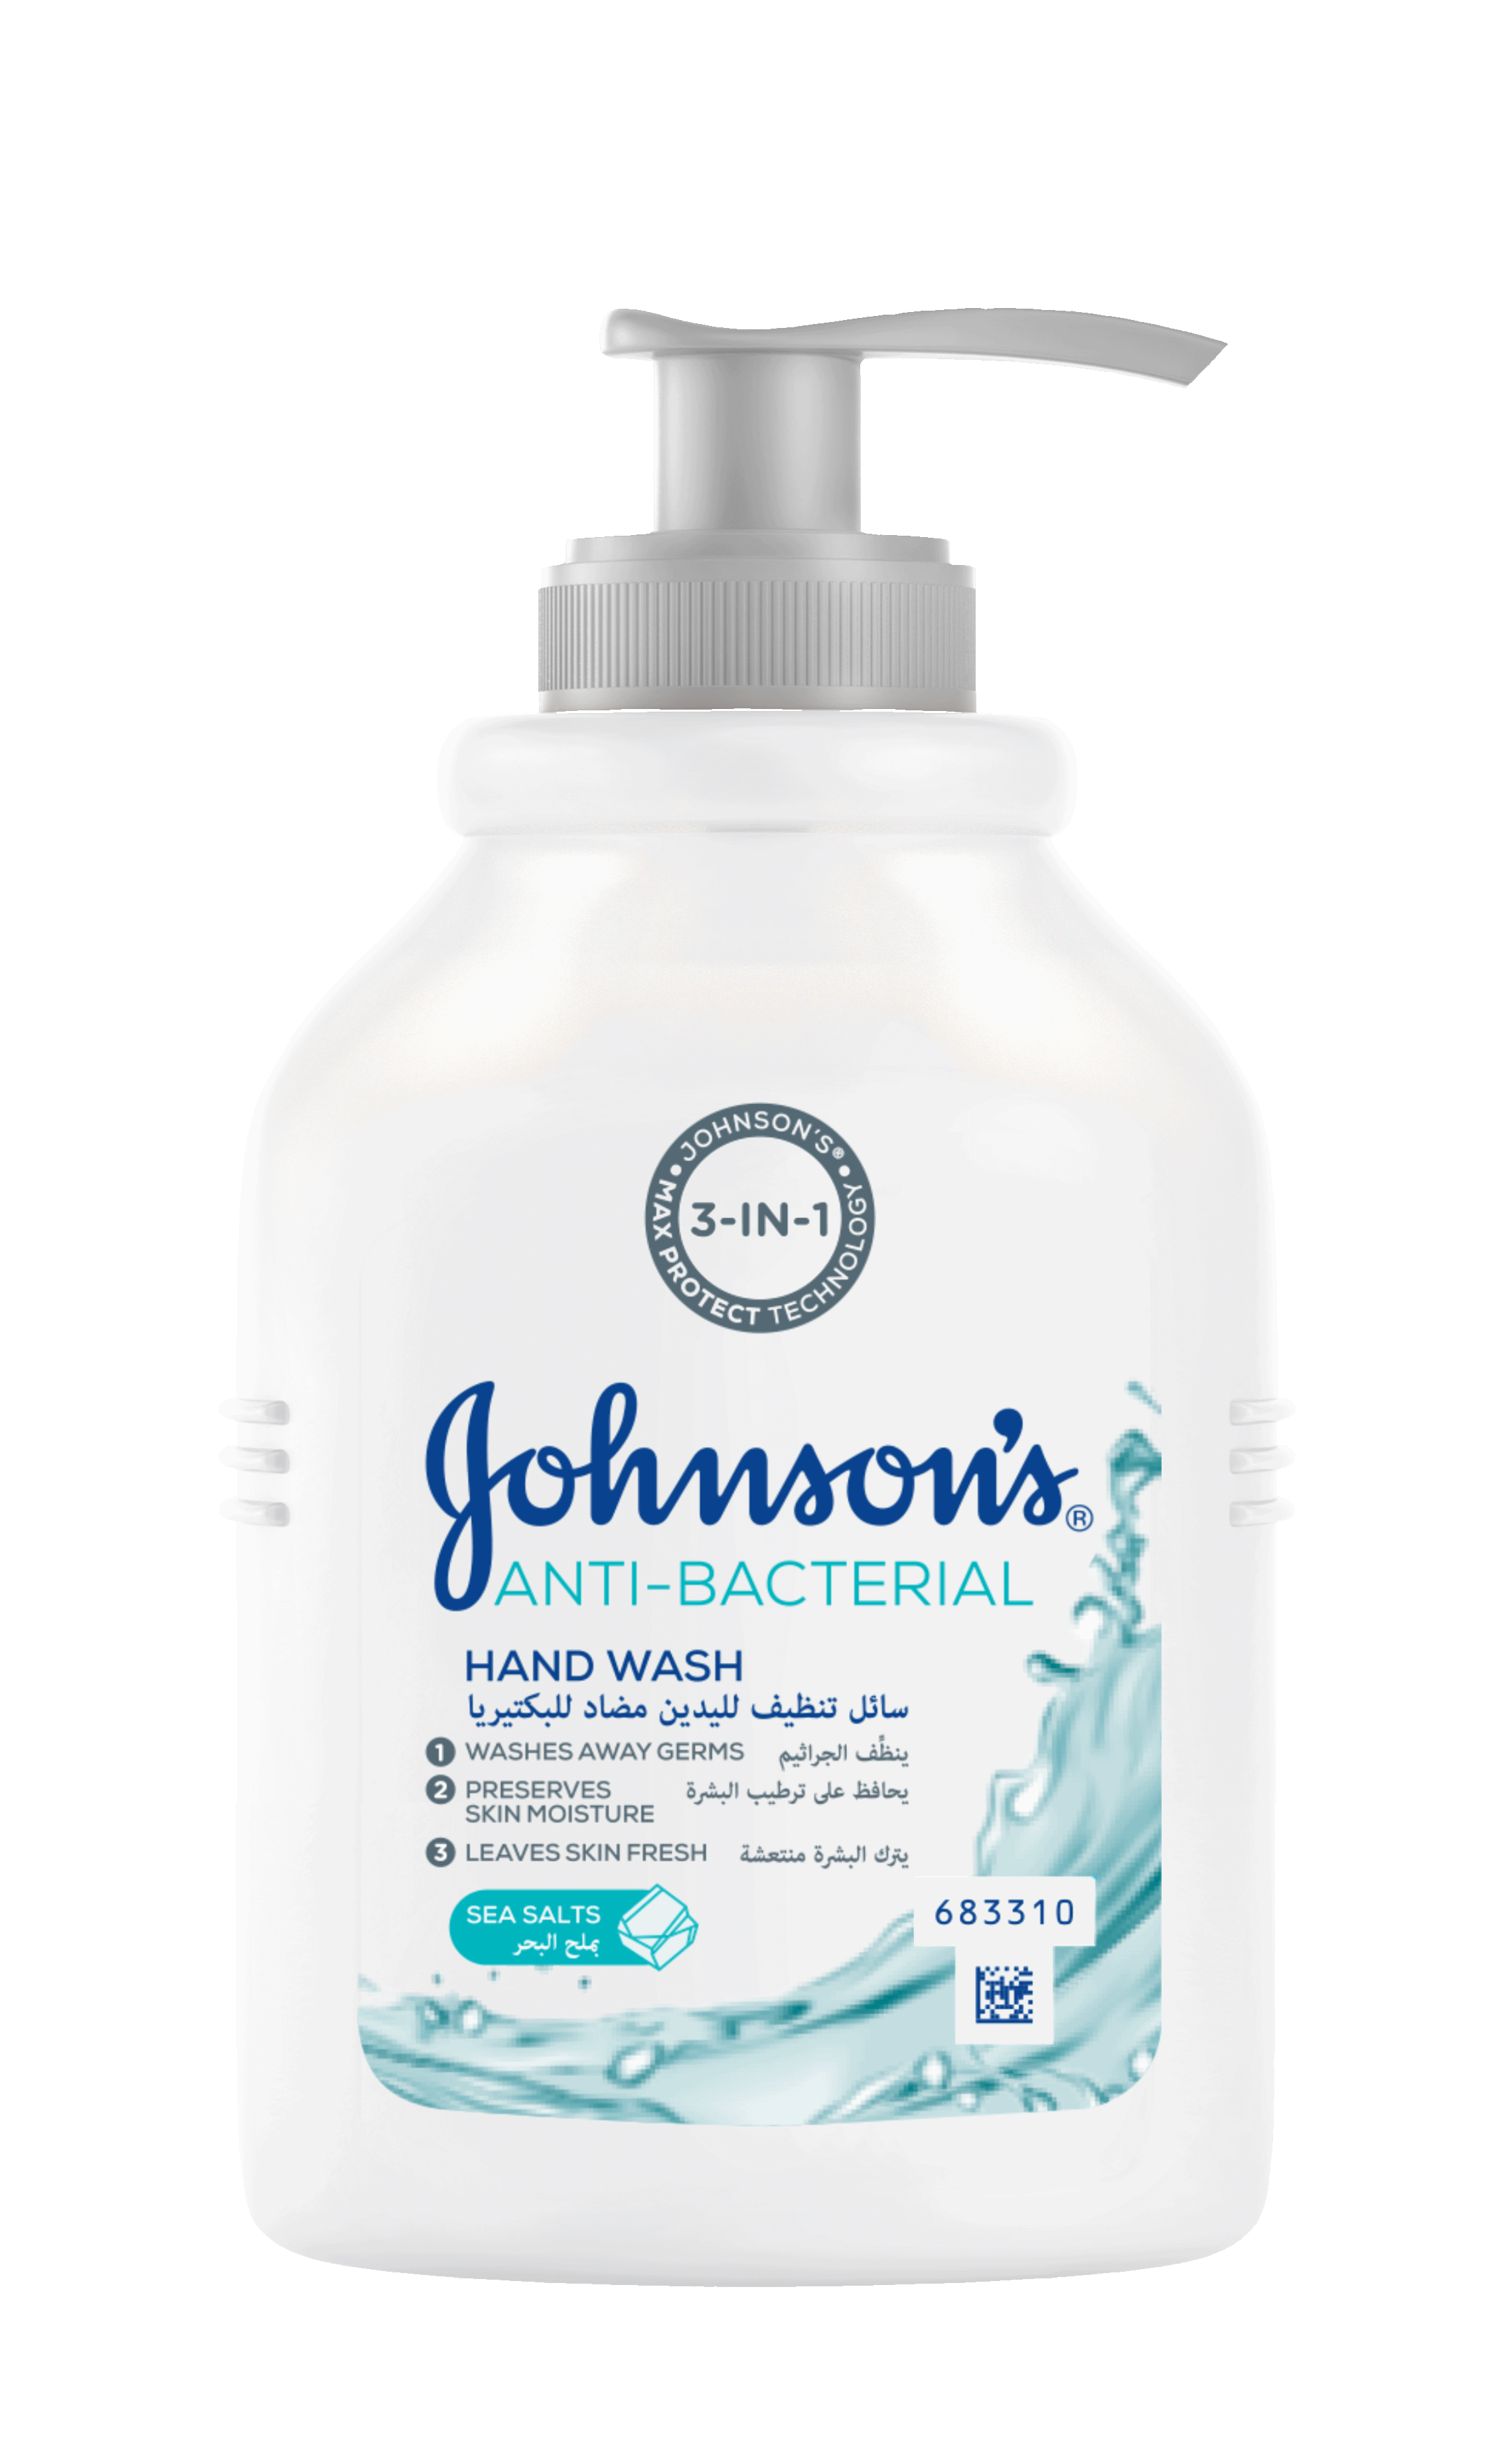 johnson and johnson liquid soap